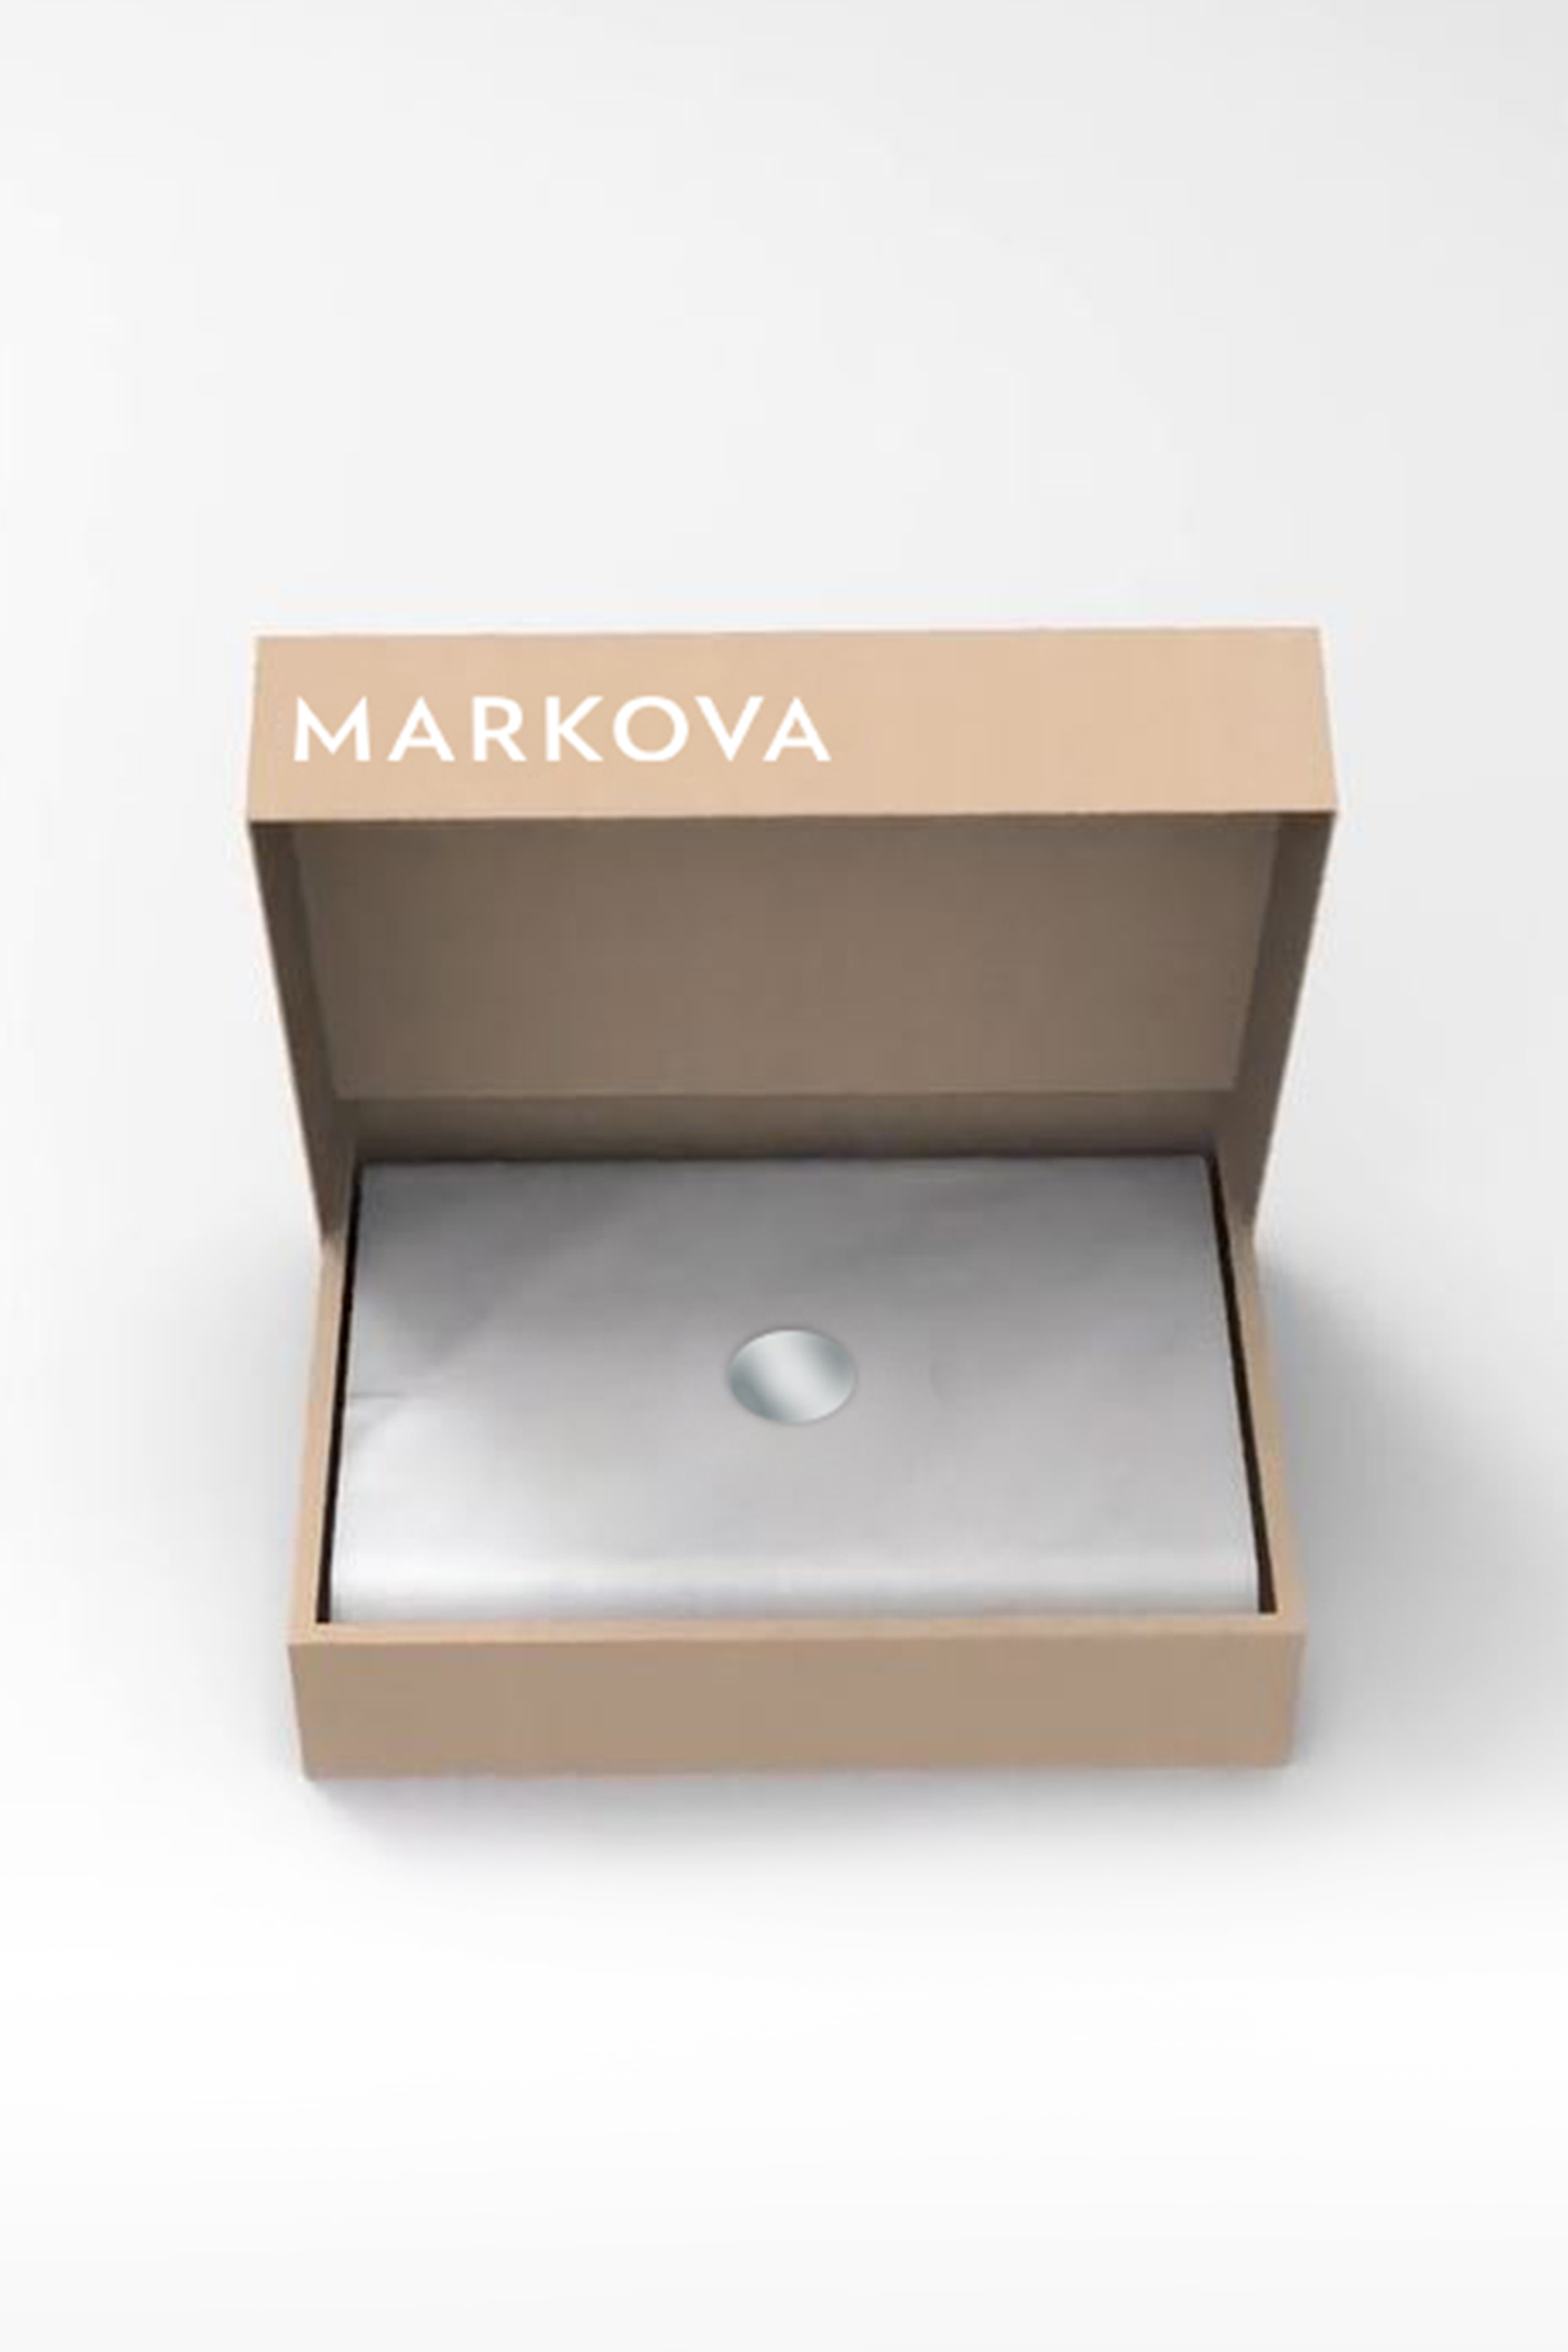 markova_markova-gift-box_26-20-2022__picture-34812